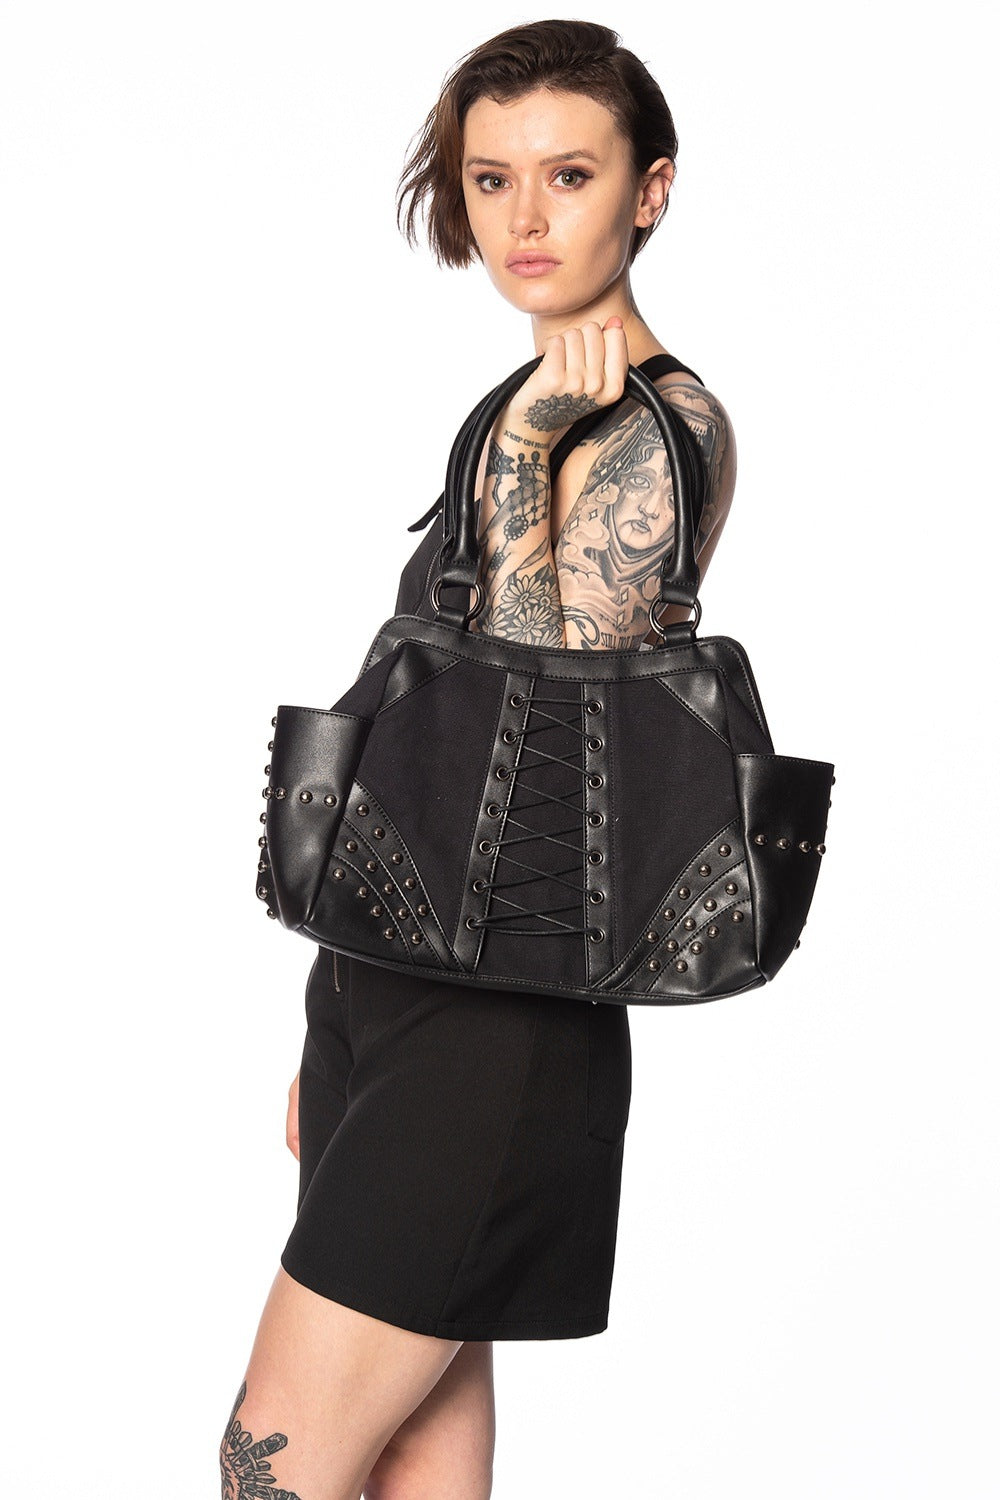 Lost Queen's Annabel Lee: A Gothic Black Handbag with a Modern Edge